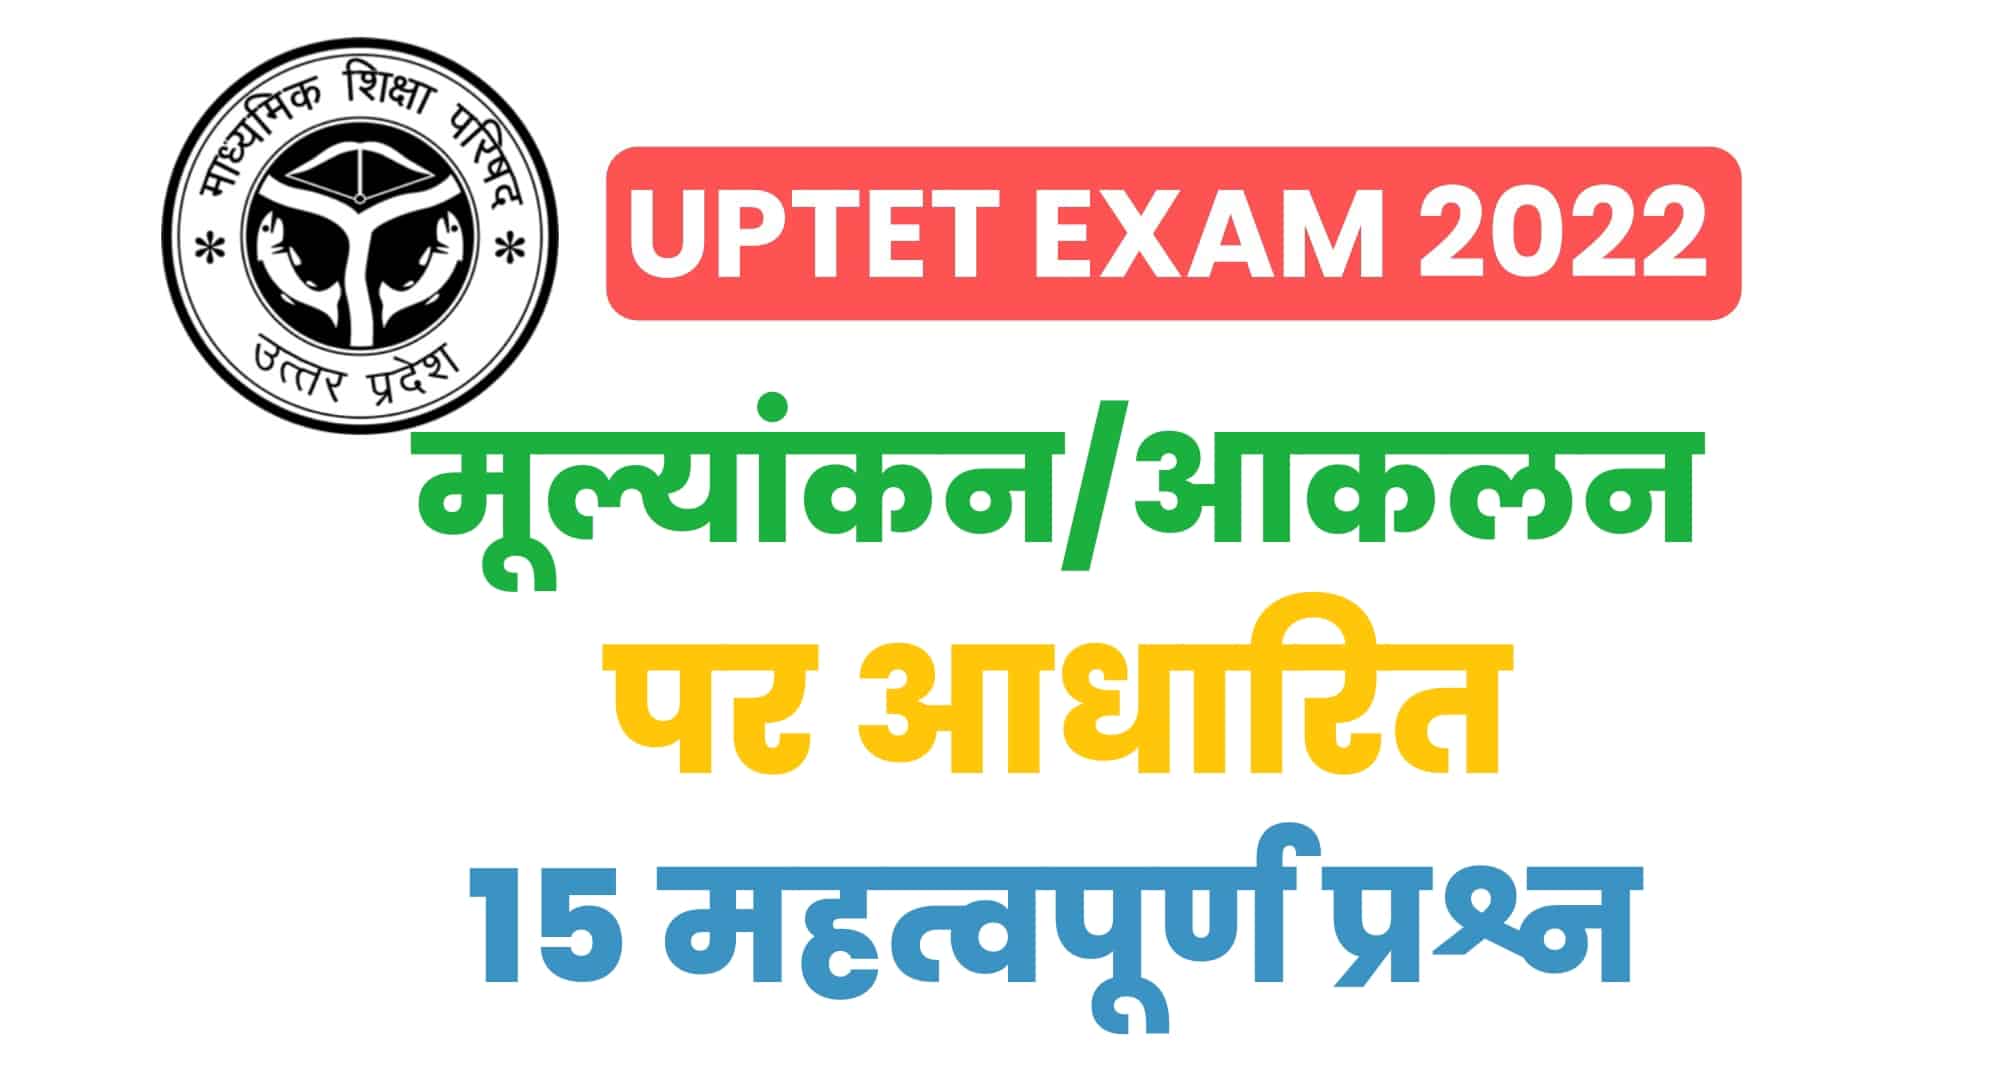 UPTET Exam 2022 : (बाल विकास) मूल्यांकन/आकलन पर आधारित 15 महत्वपूर्ण प्रश्न